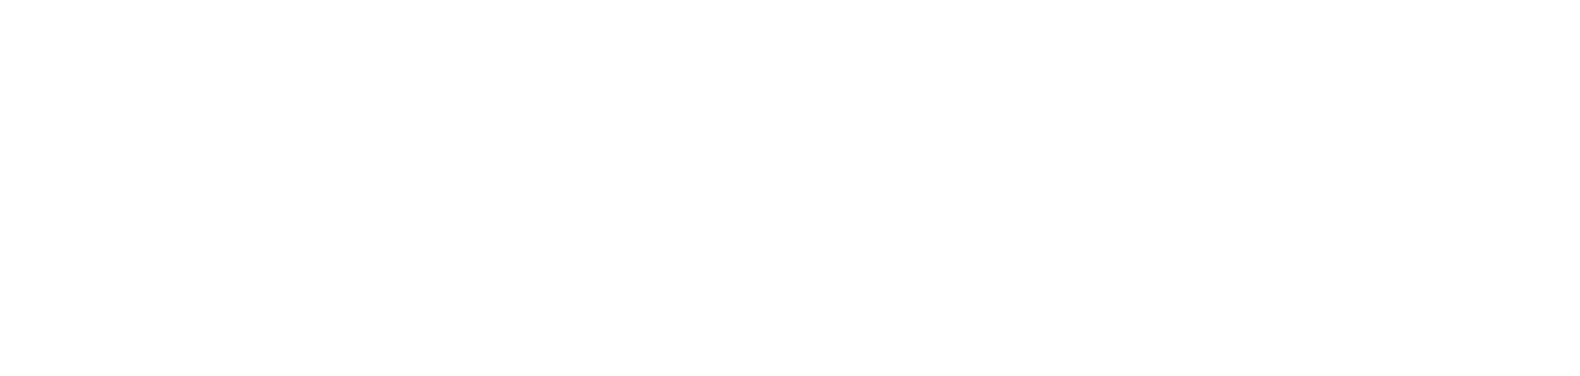 Enerpac Tool Group
 Logo groß für dunkle Hintergründe (transparentes PNG)